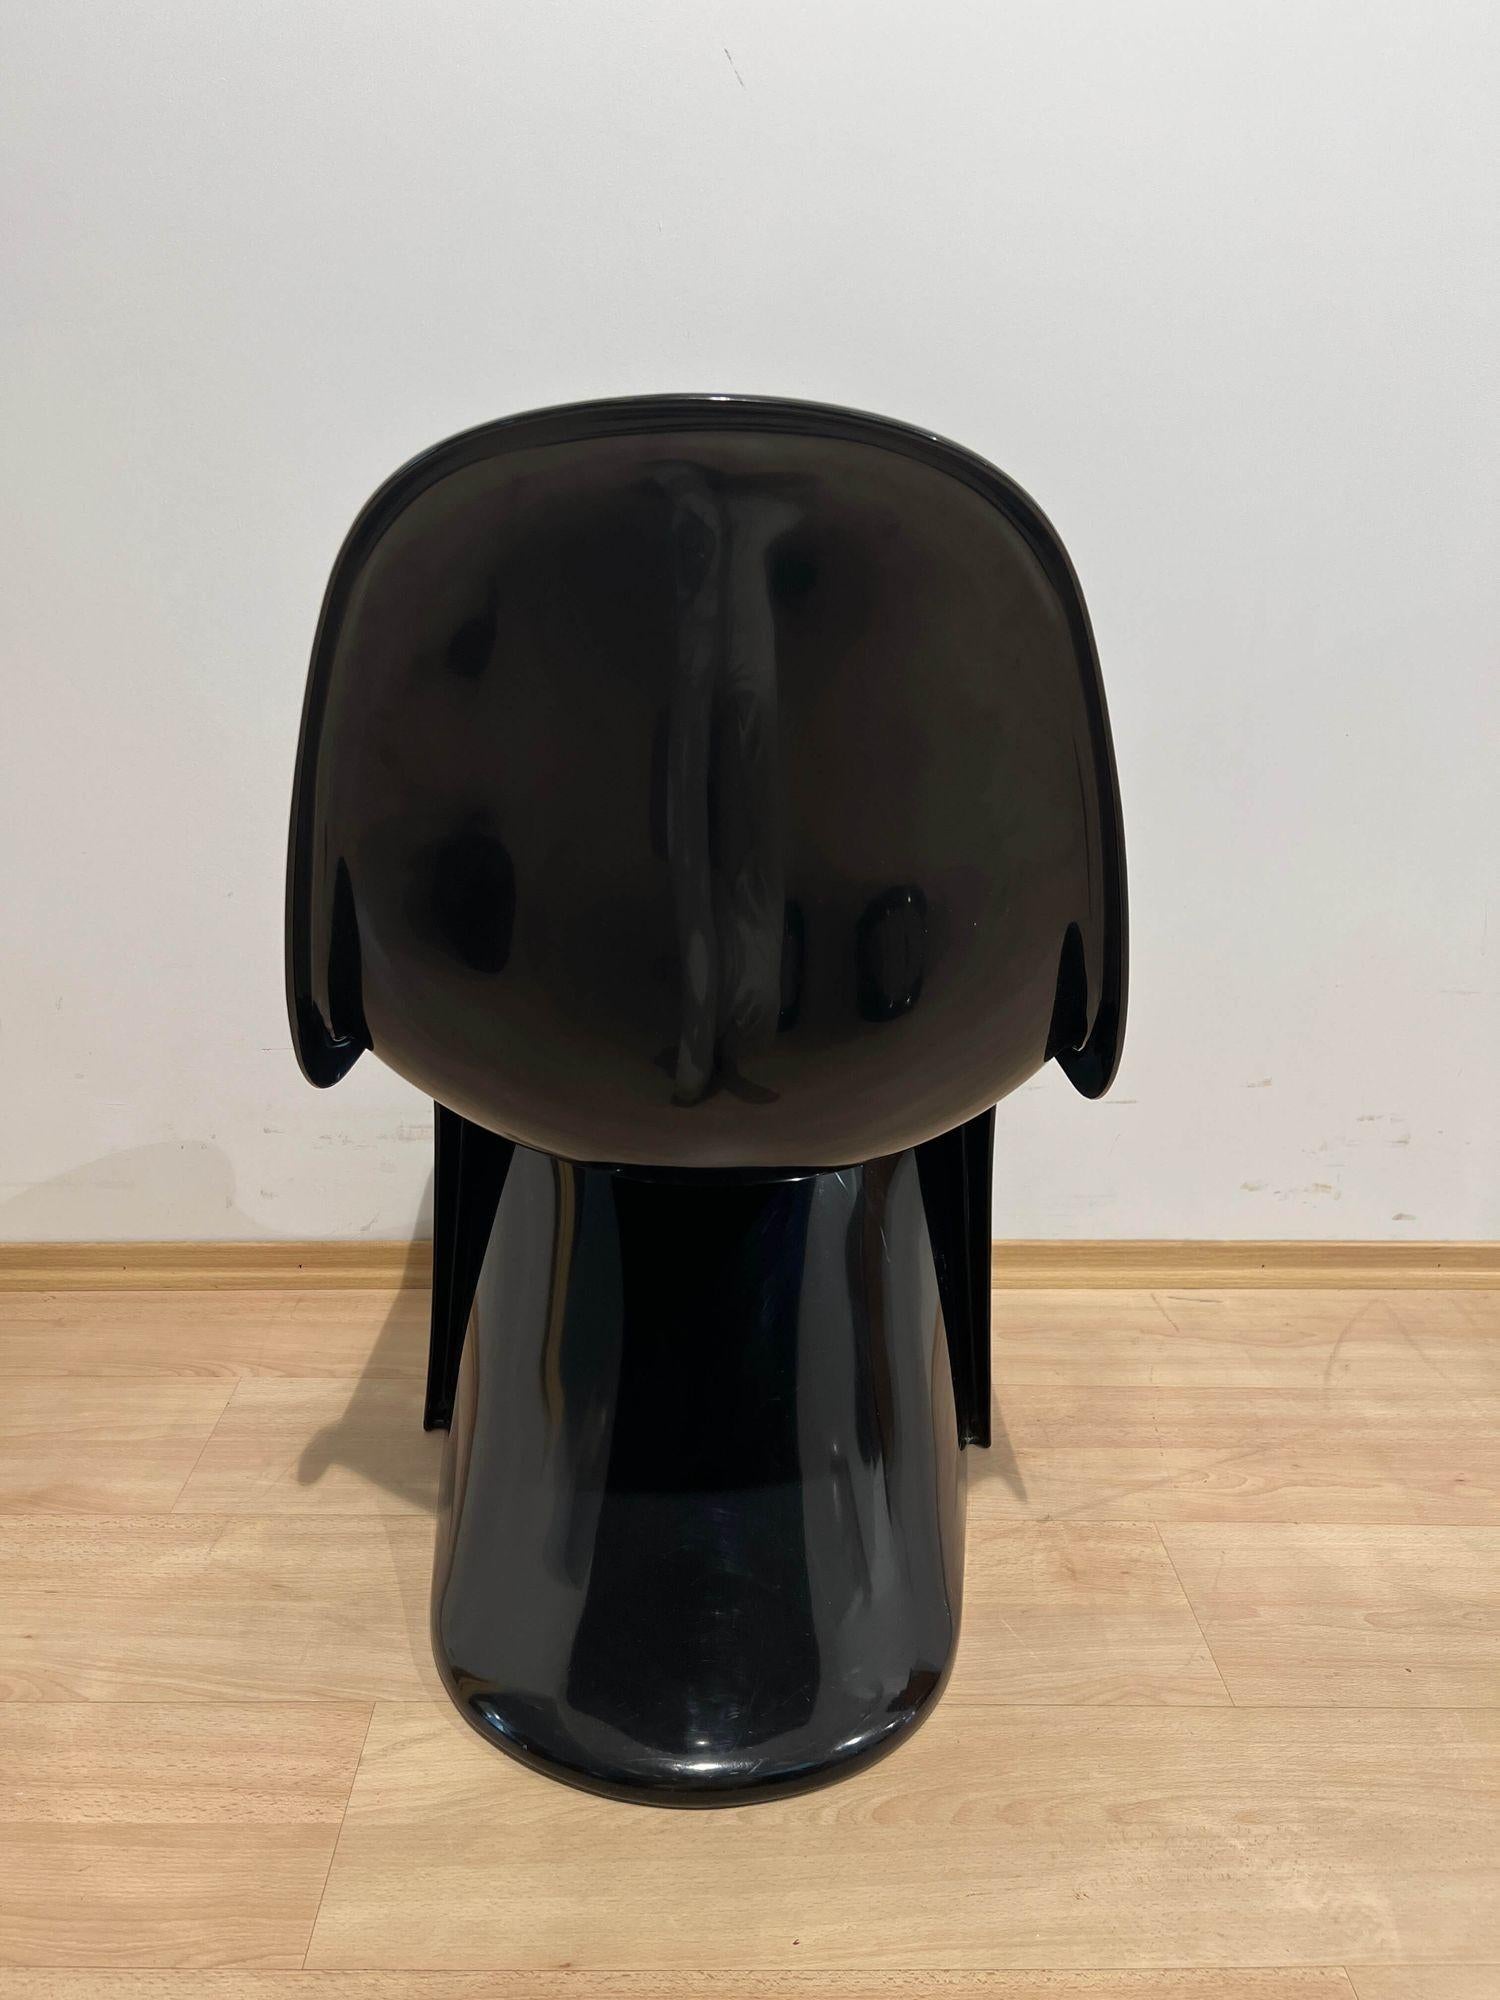 Verner Panton ‚Panton’ Cantilever Chair in Black Pu, Germany, 1971 For Sale 5